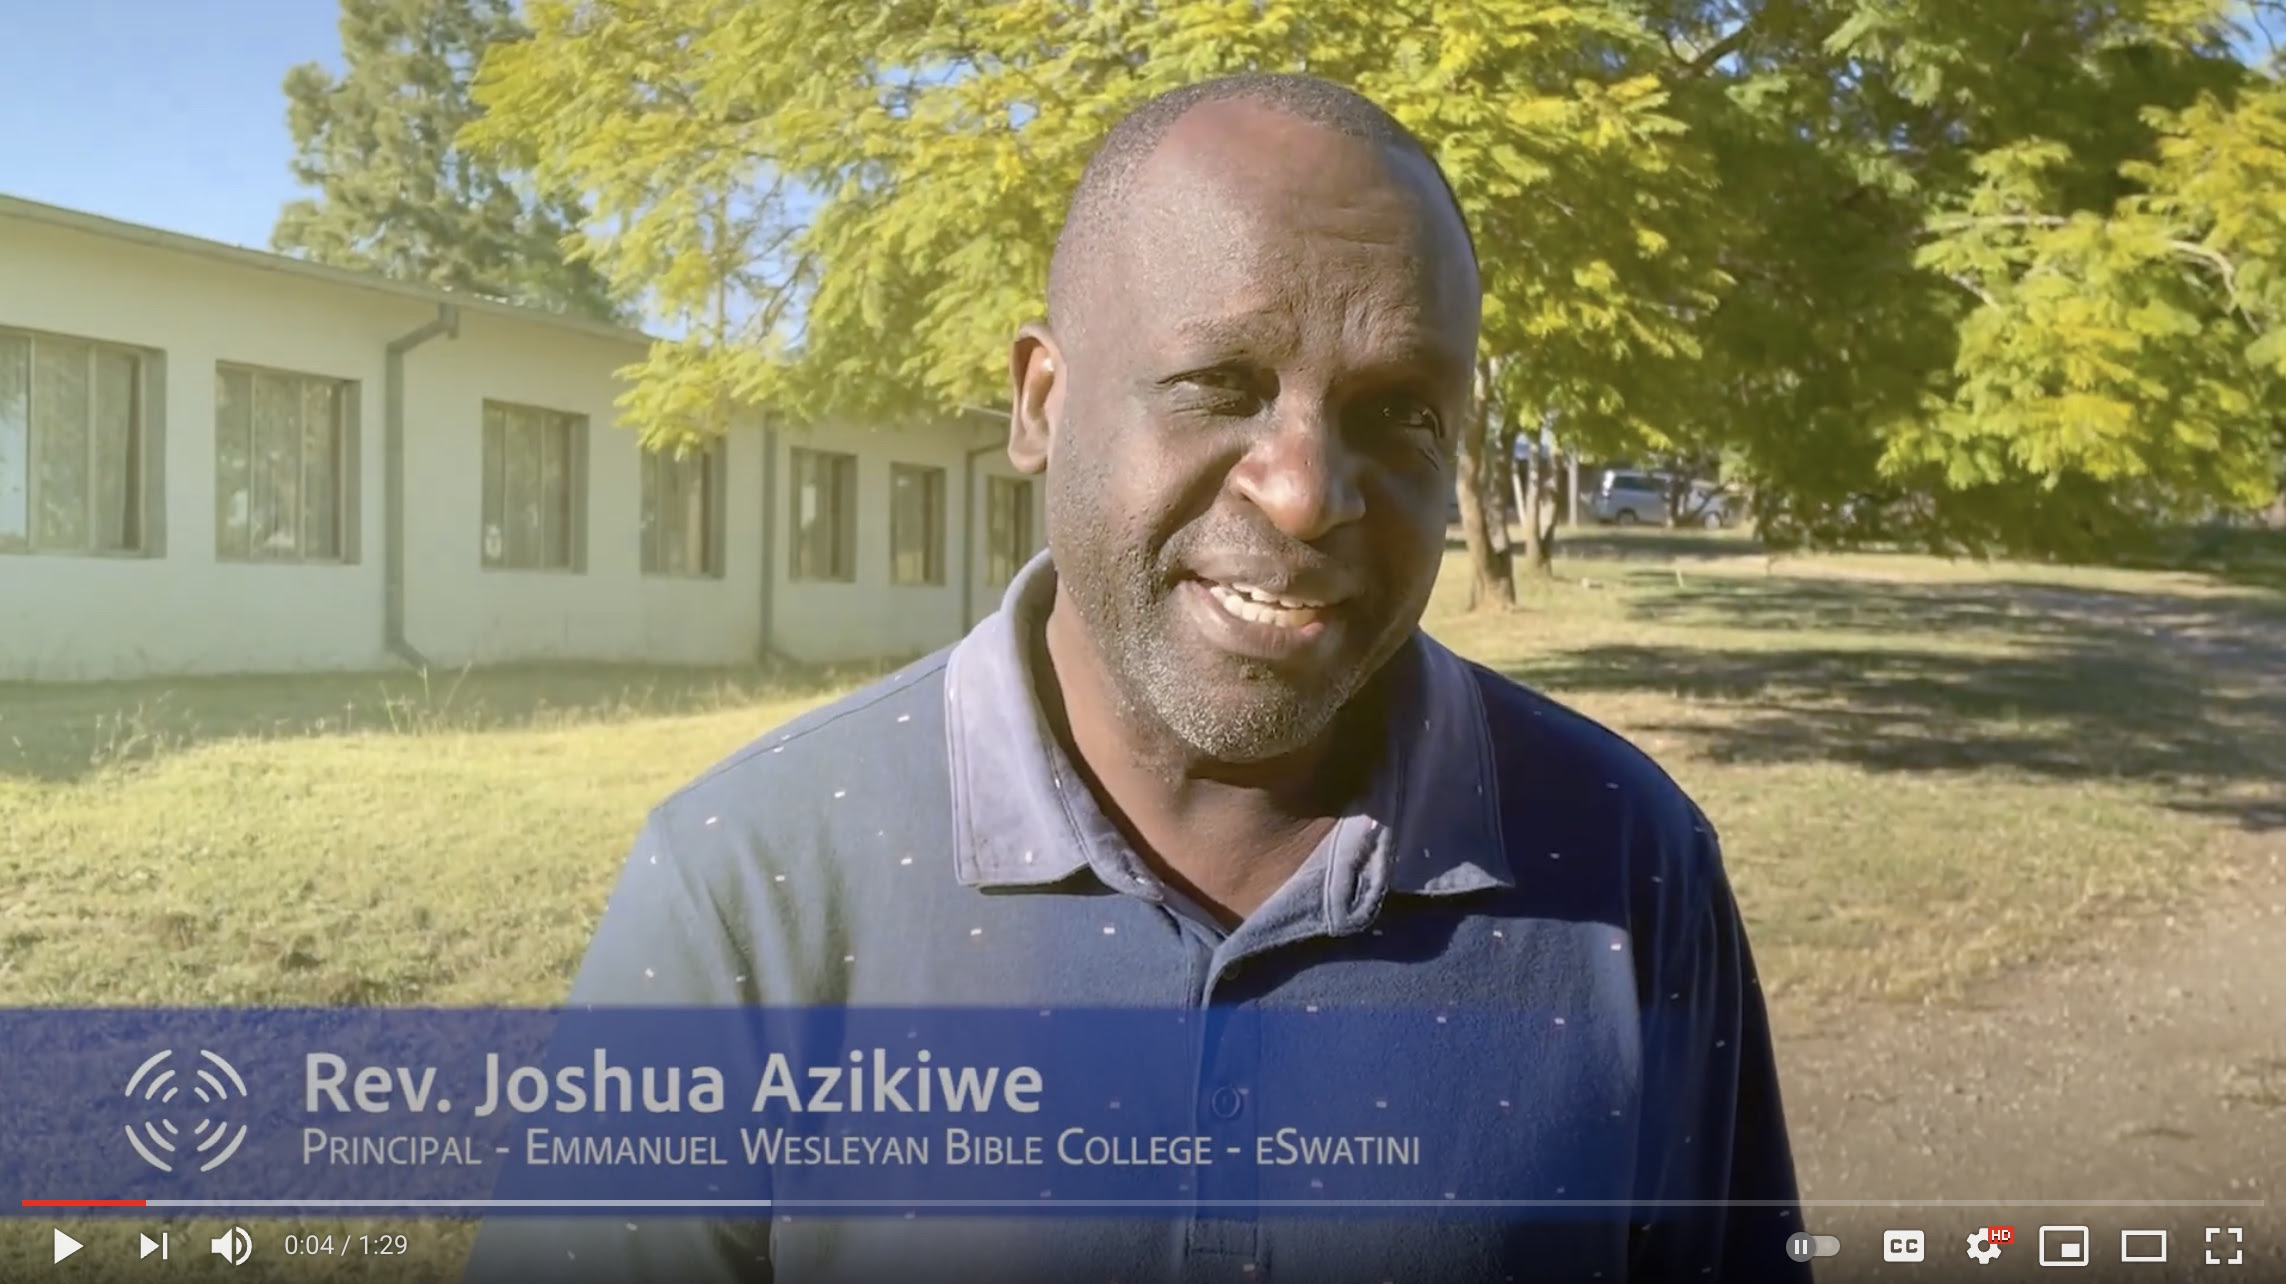 Video of Joshua Azikiwe